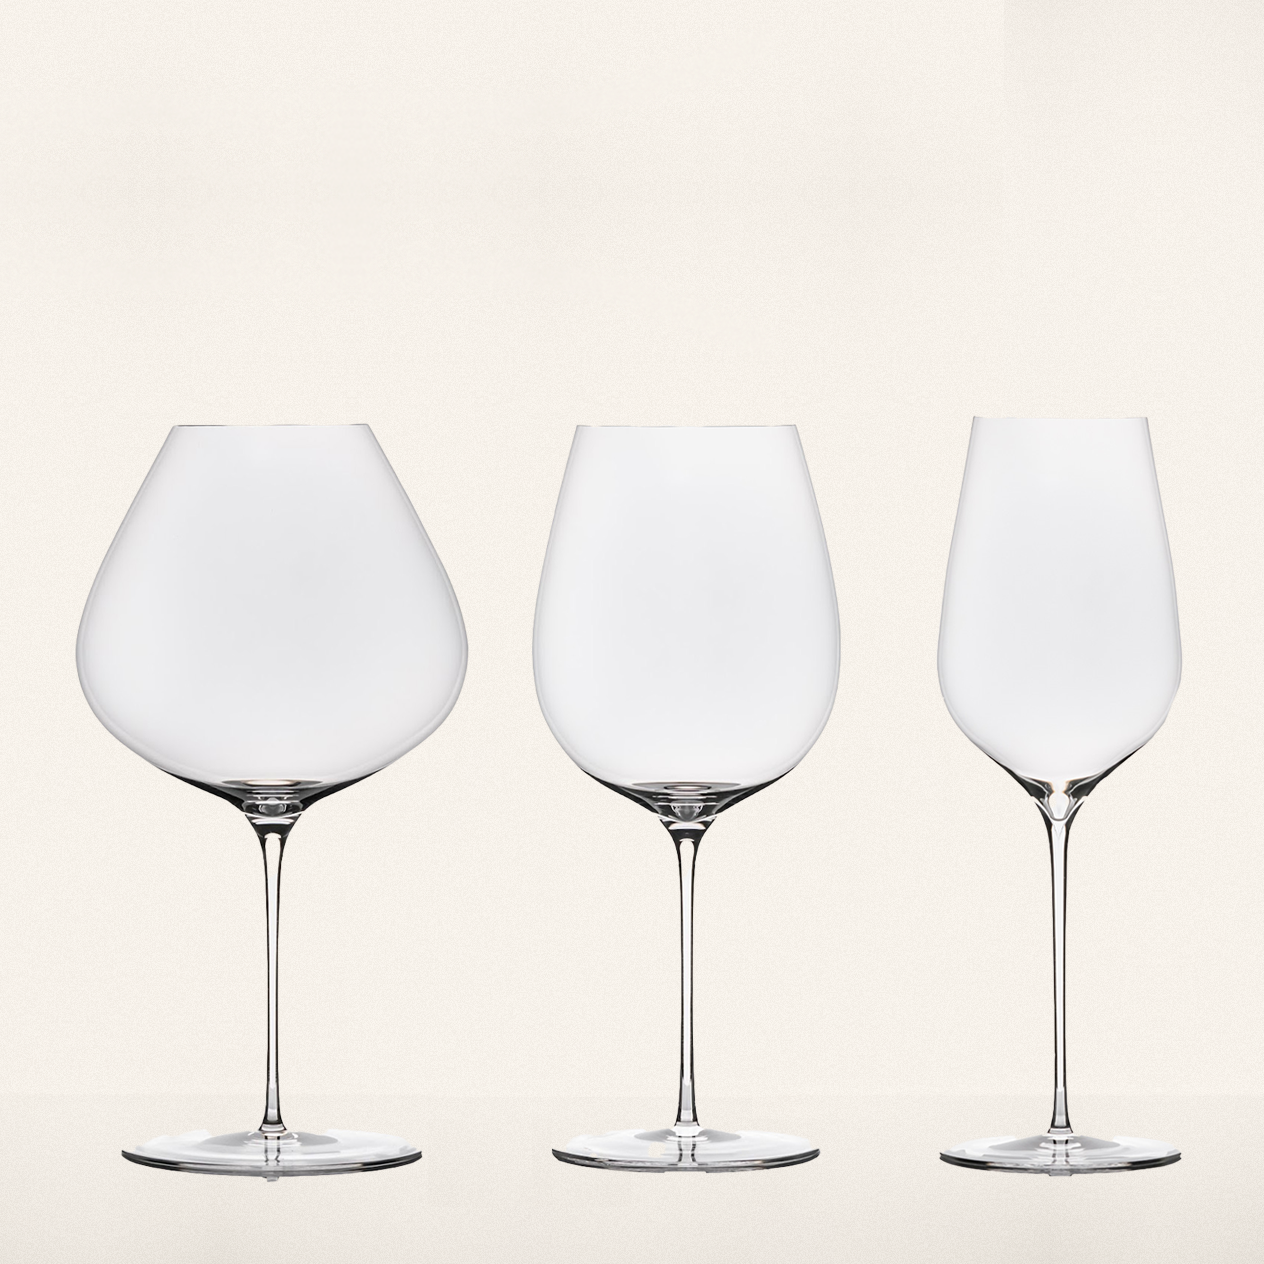 L'Esthete - set of 6 glasses